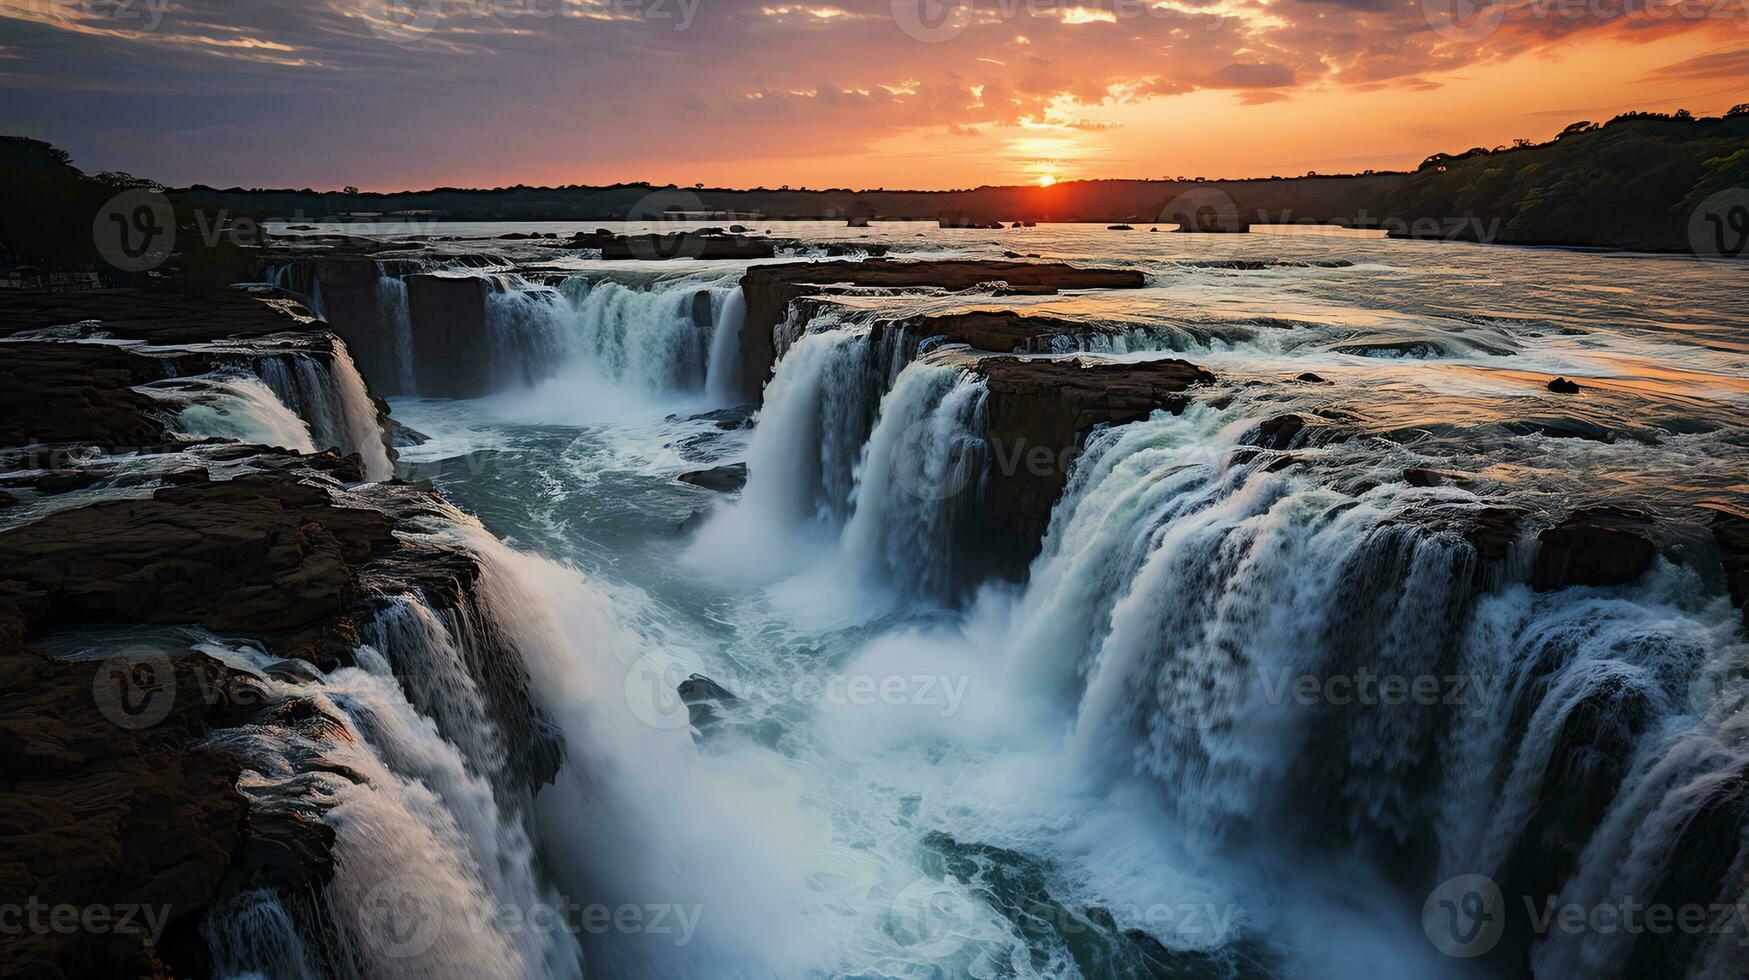 a beautiful sunset over a waterfall photo